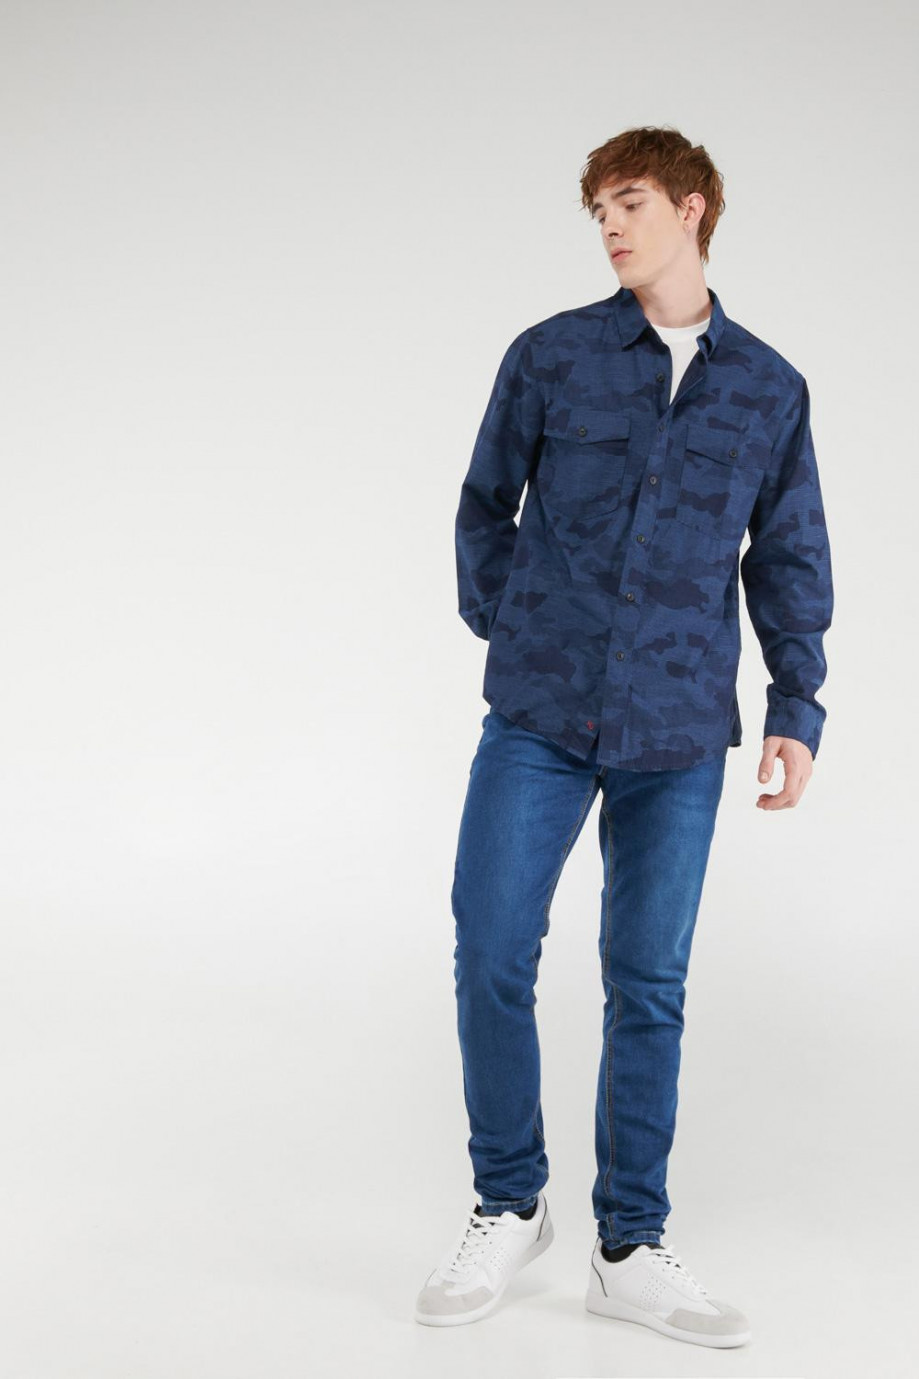 Camisa manga larga azul intenso con estampado y doble bolsillo